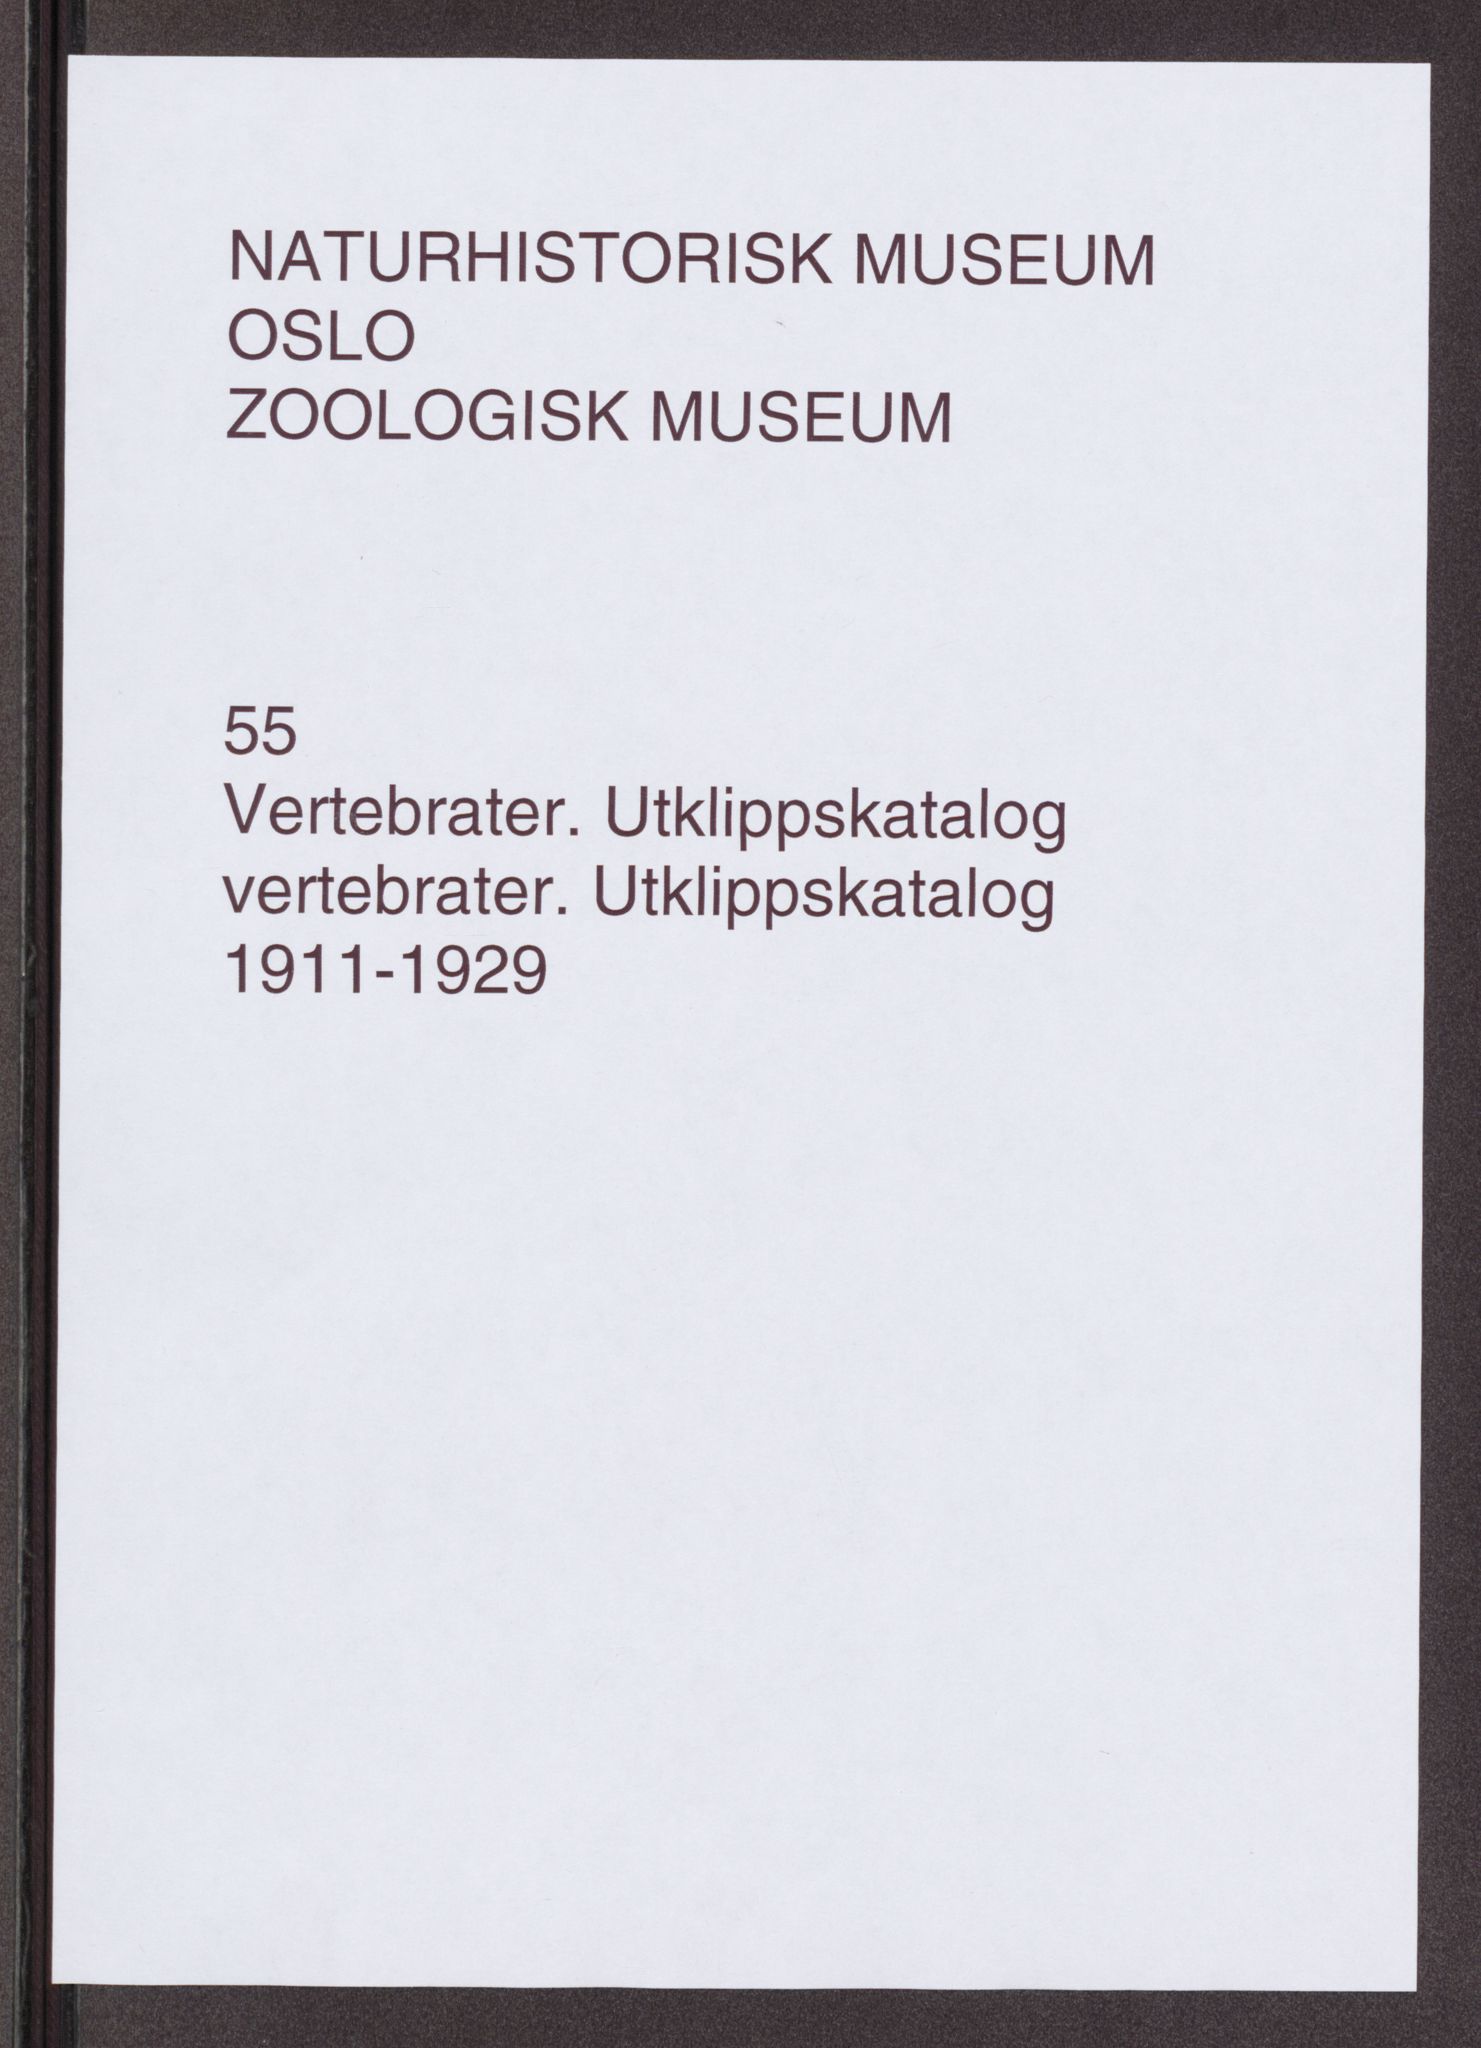 Naturhistorisk museum (Oslo), NHMO/-/5, 1911-1929